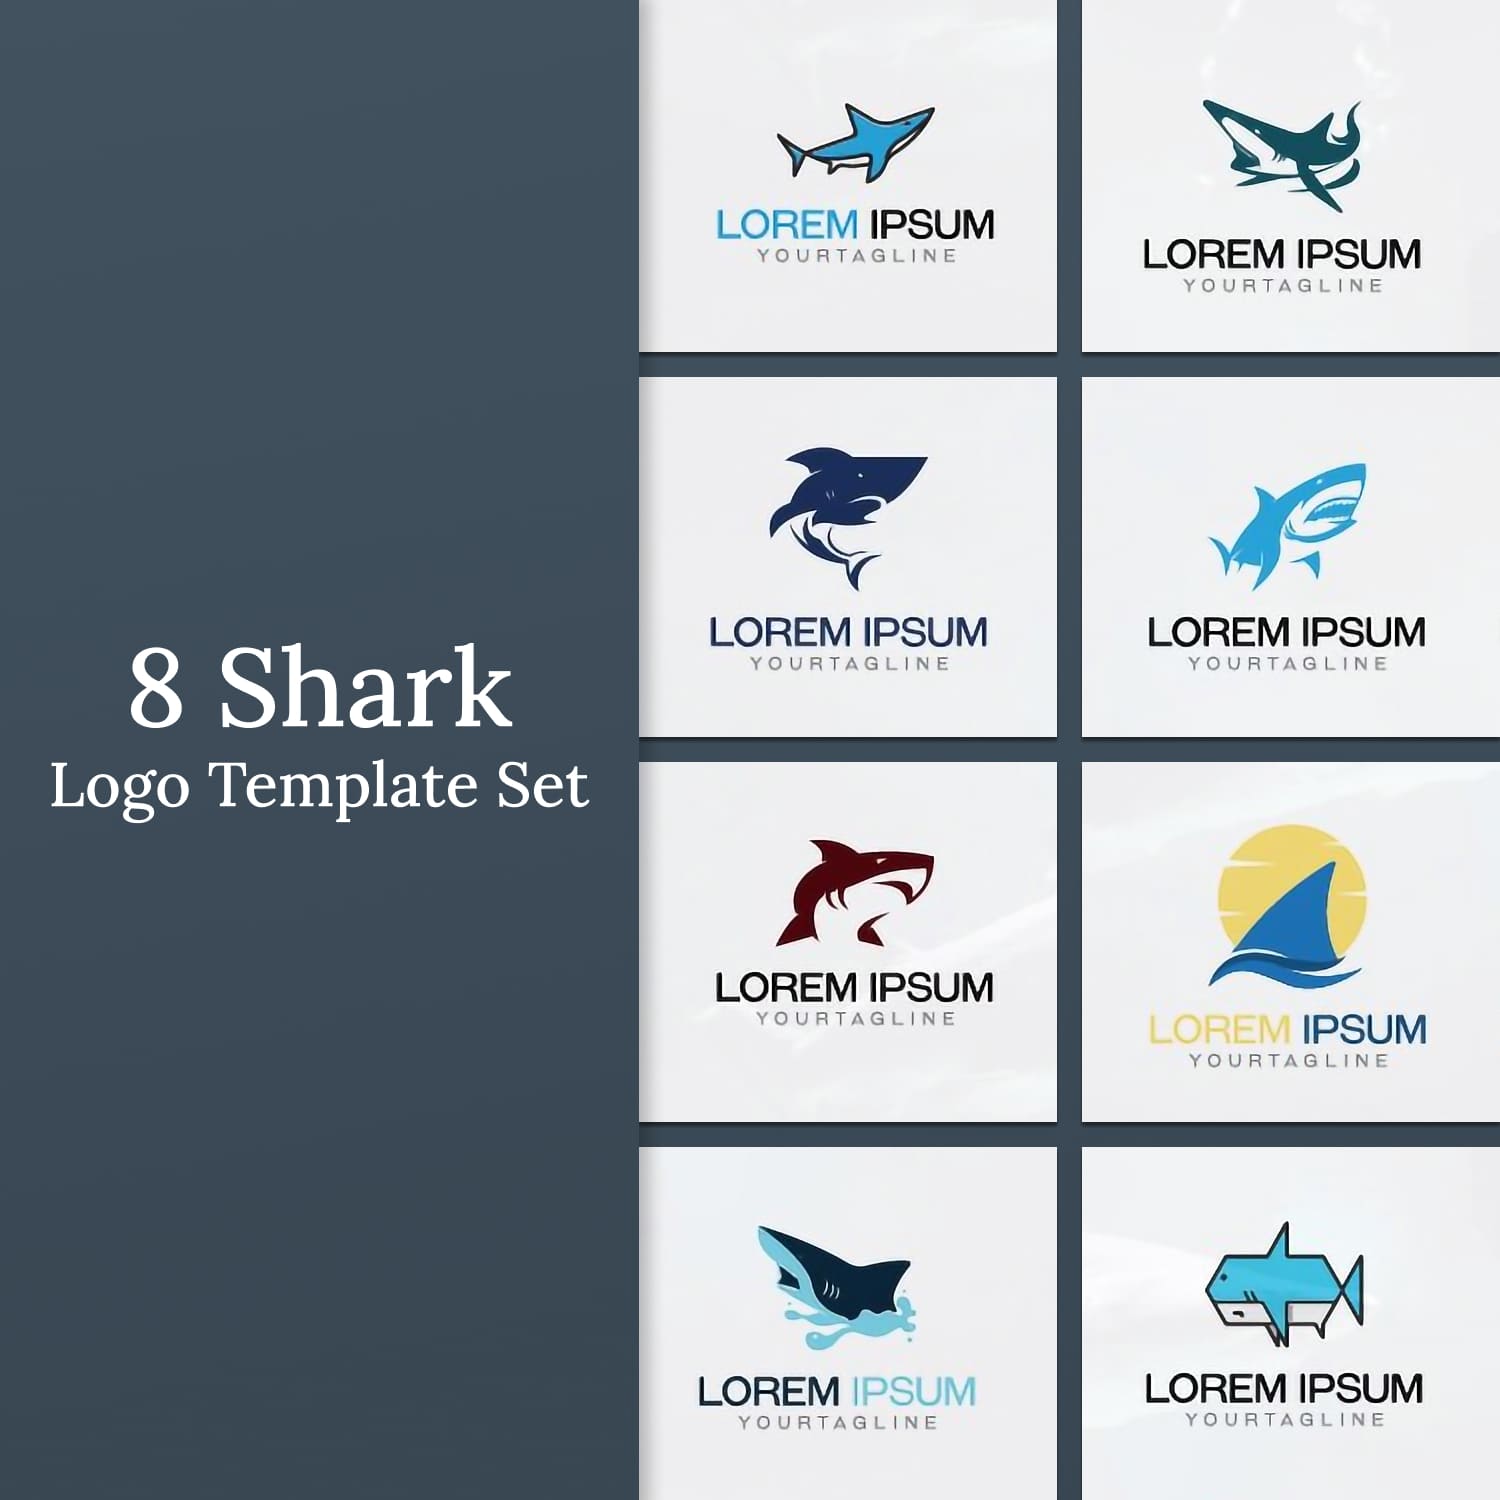 8 shark logo template set - main image preview.